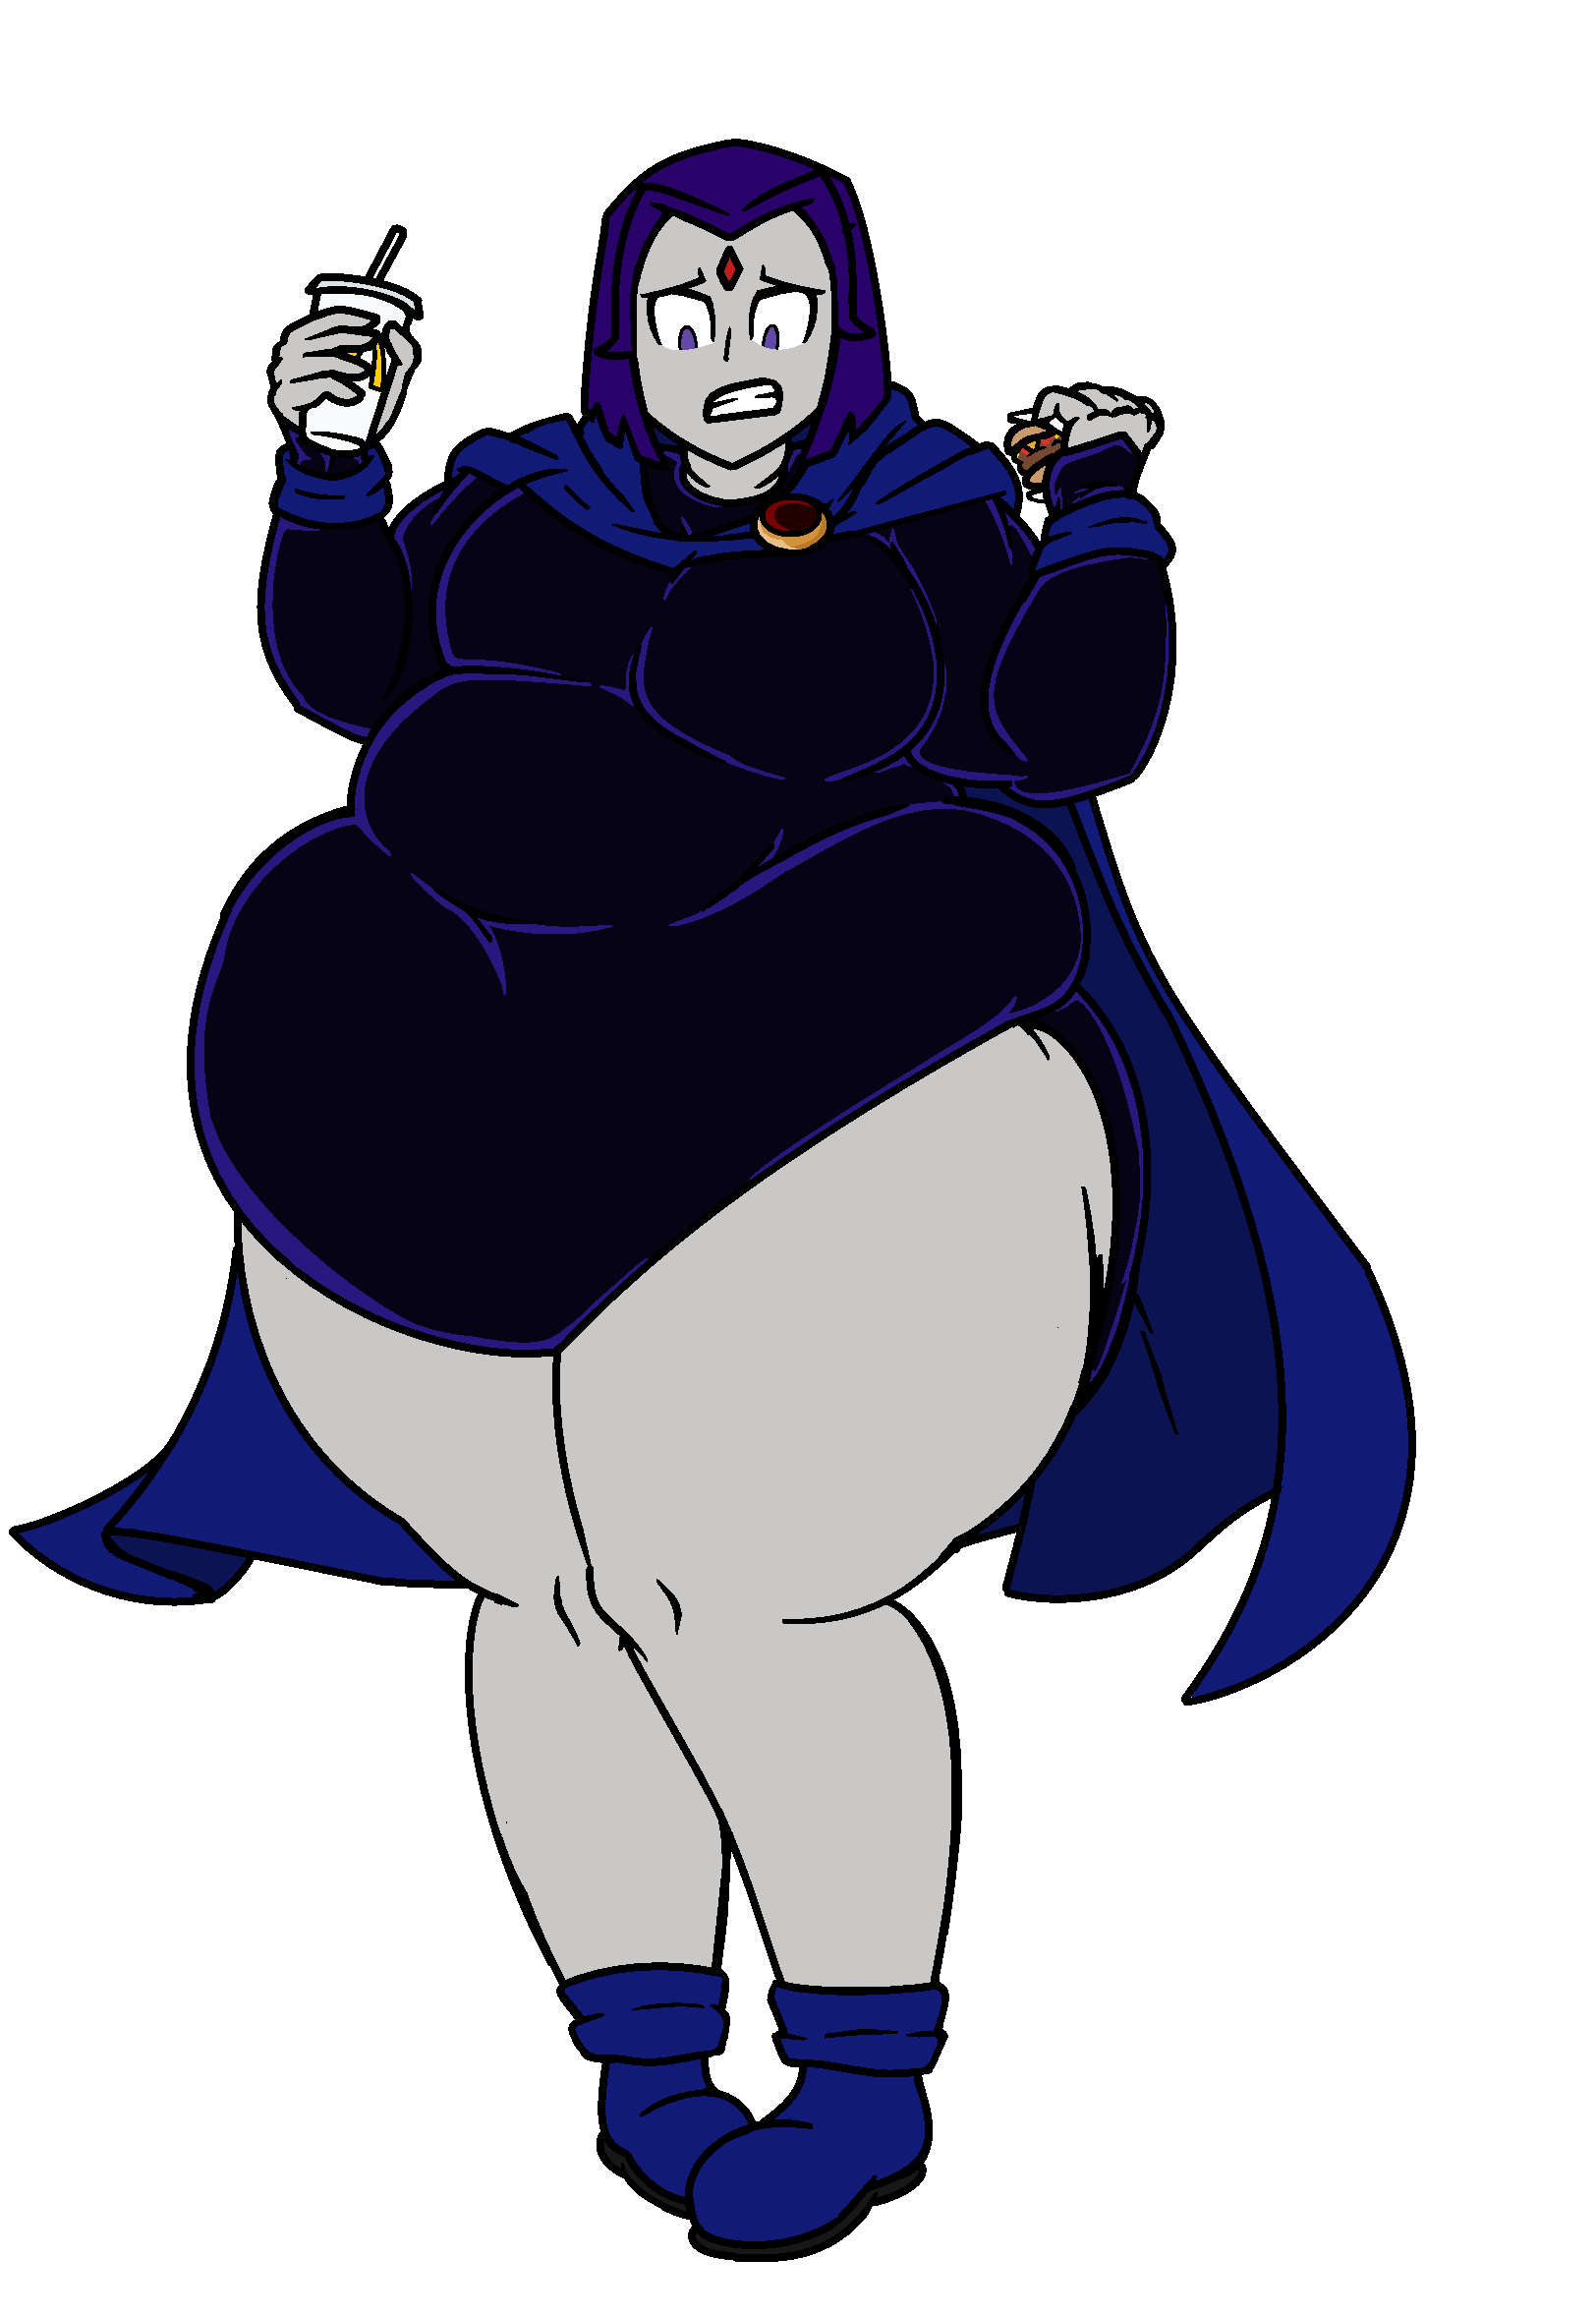 Raven's Fast Food Addiction.